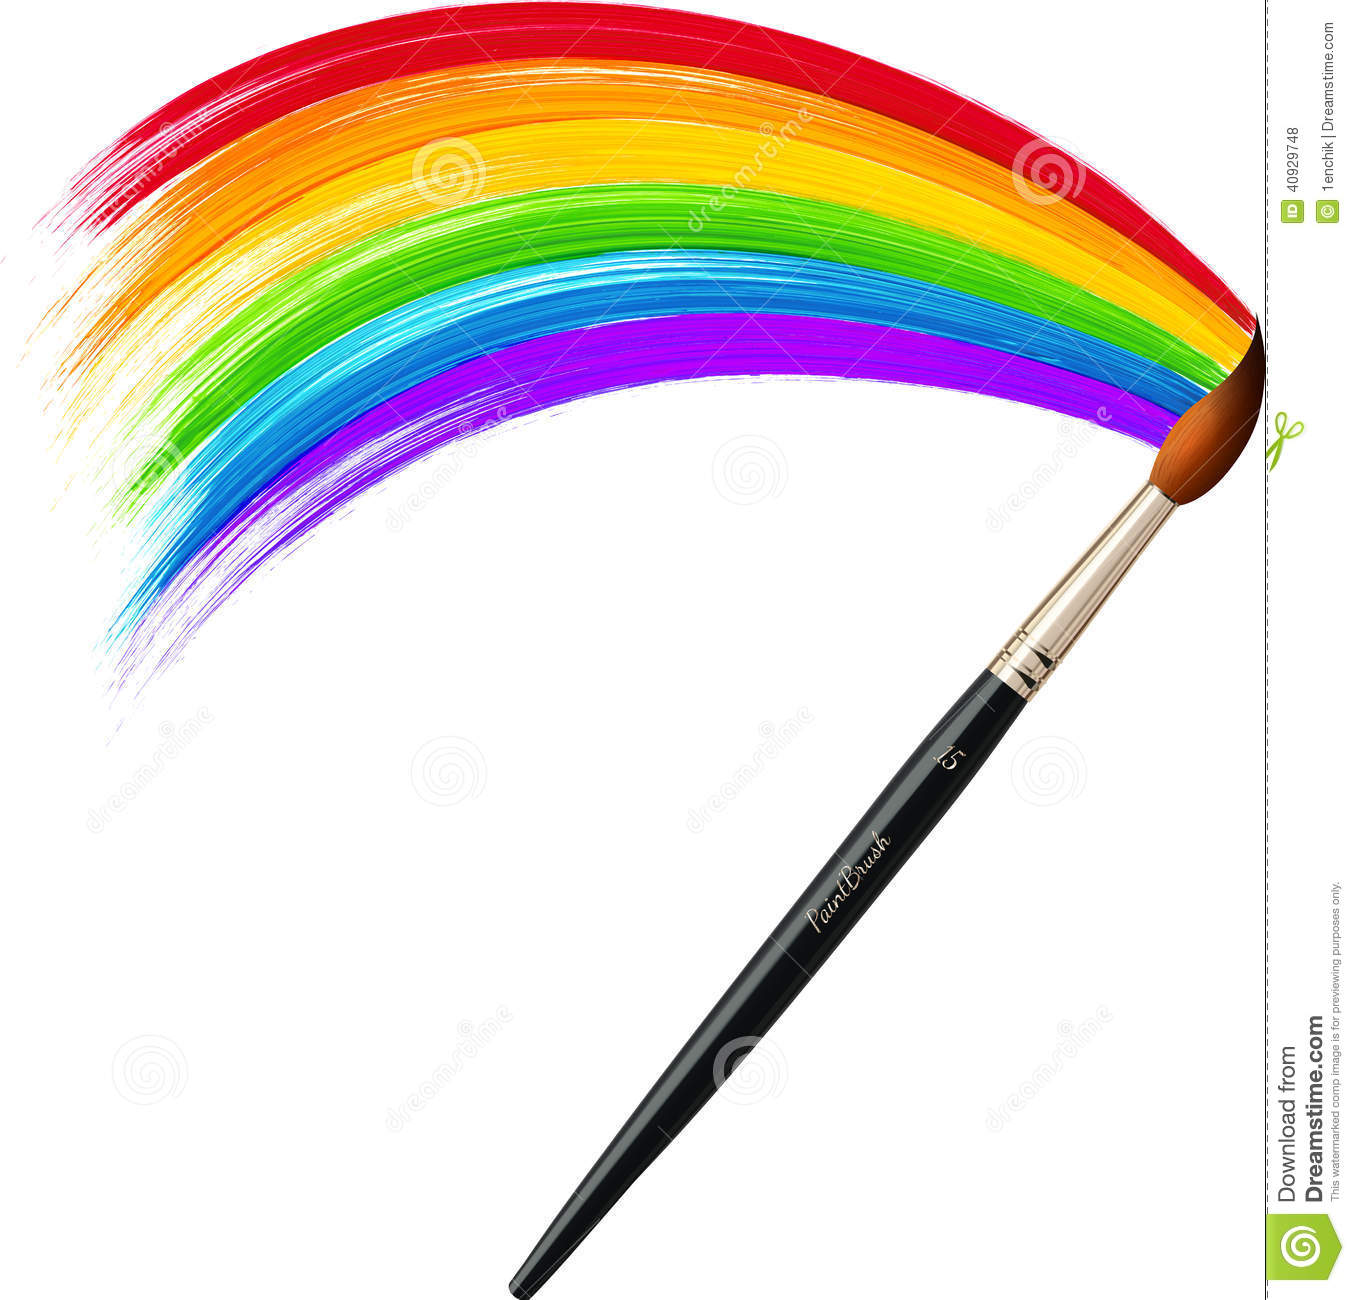 Paint brush clip art. Paintbrush clipart rainbow